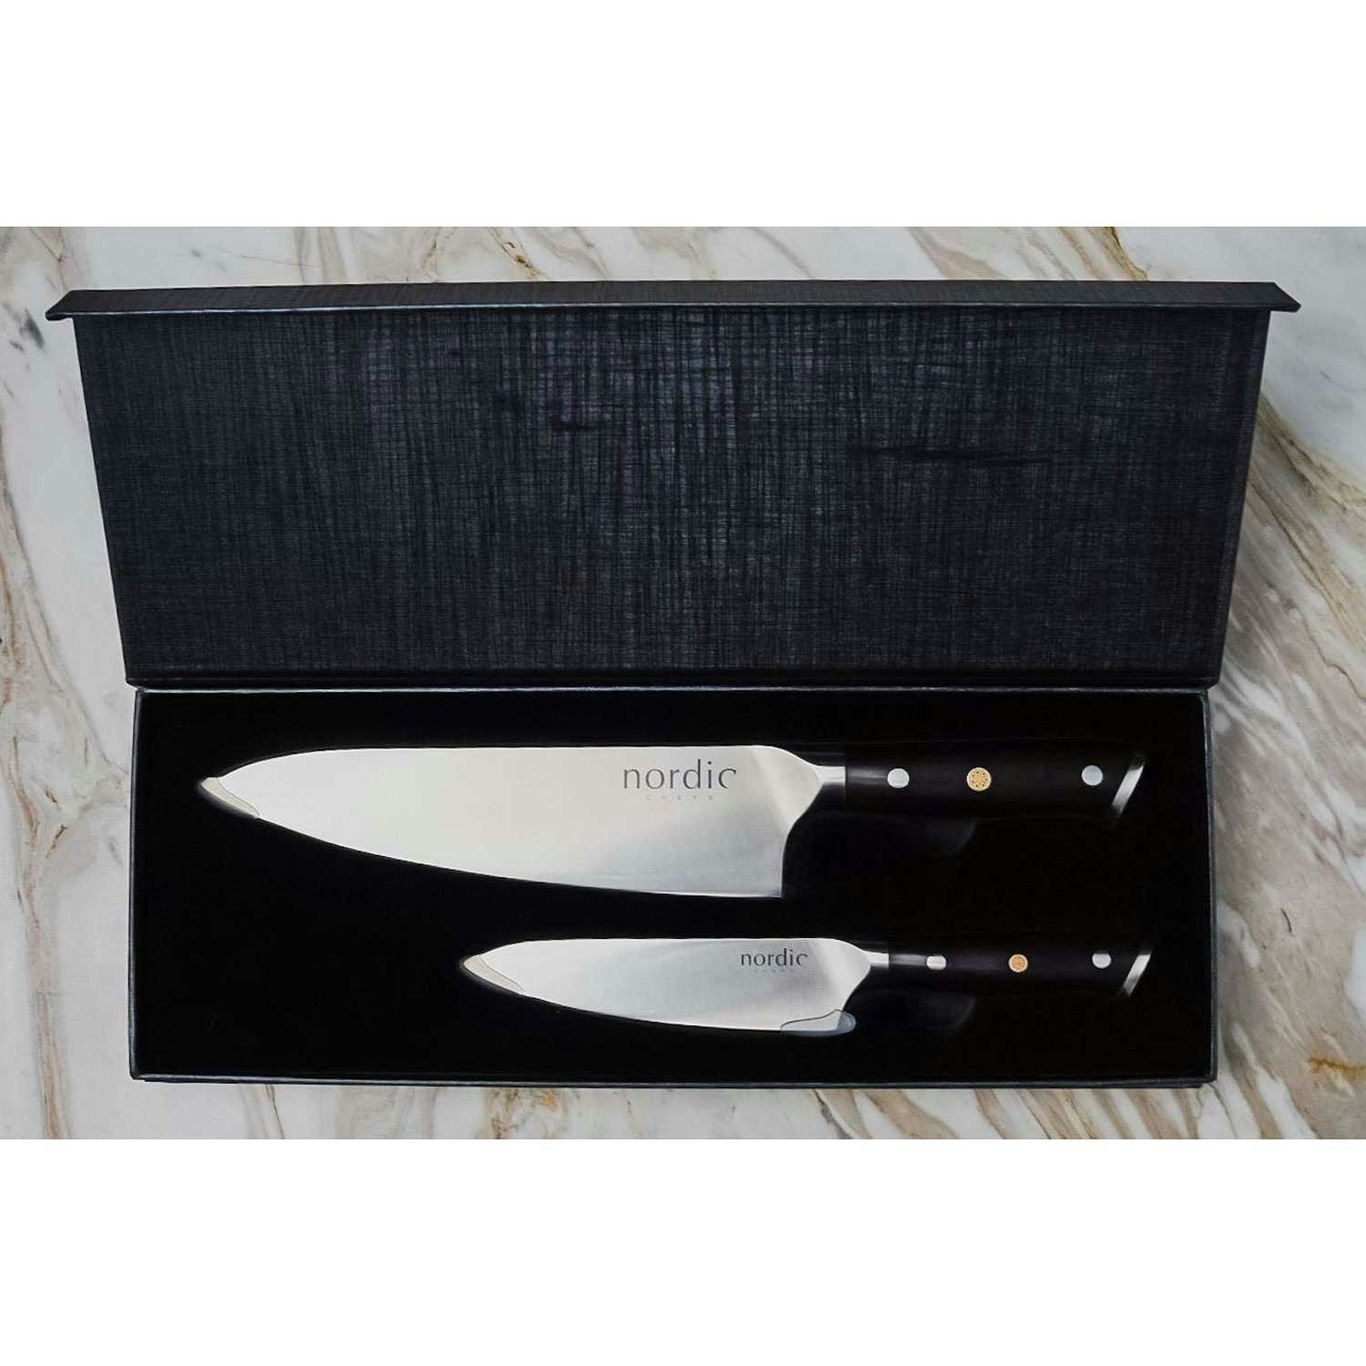 https://royaldesign.com/image/2/nordic-chef-nordic-knife-sets-2-pack-8?w=800&quality=80